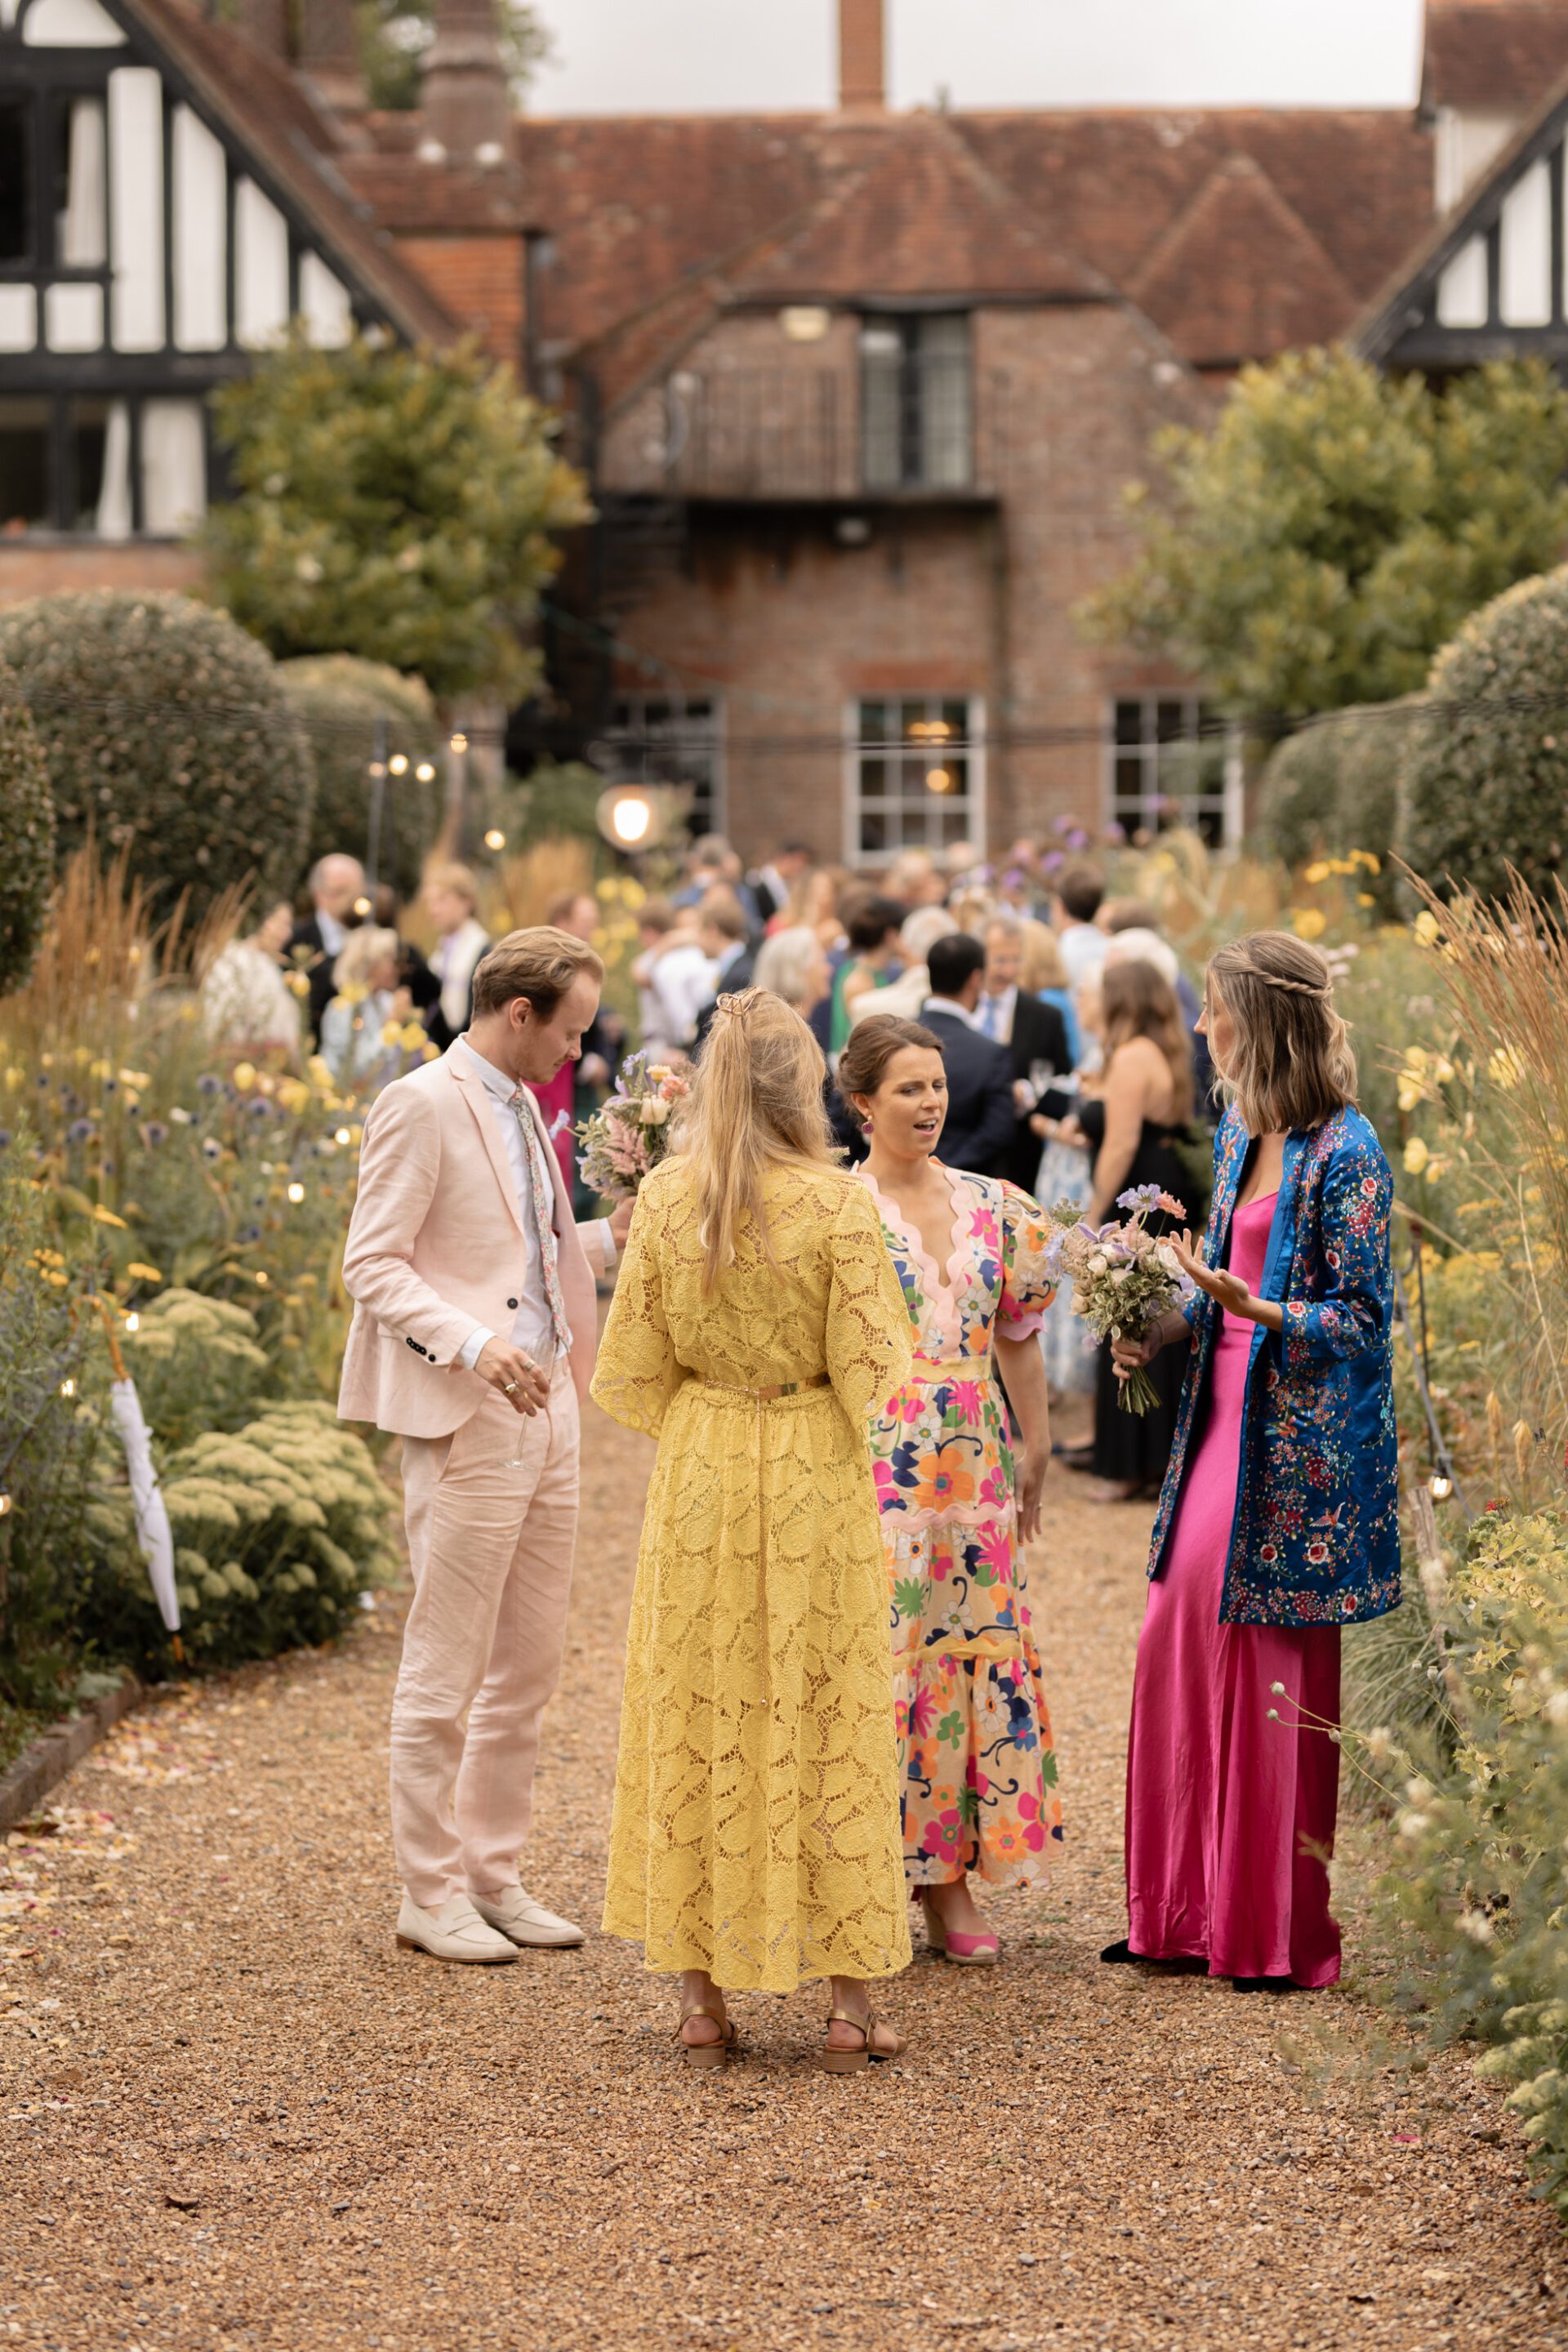 Wedding guests mingle at Brickwall House, Kent wedding venue